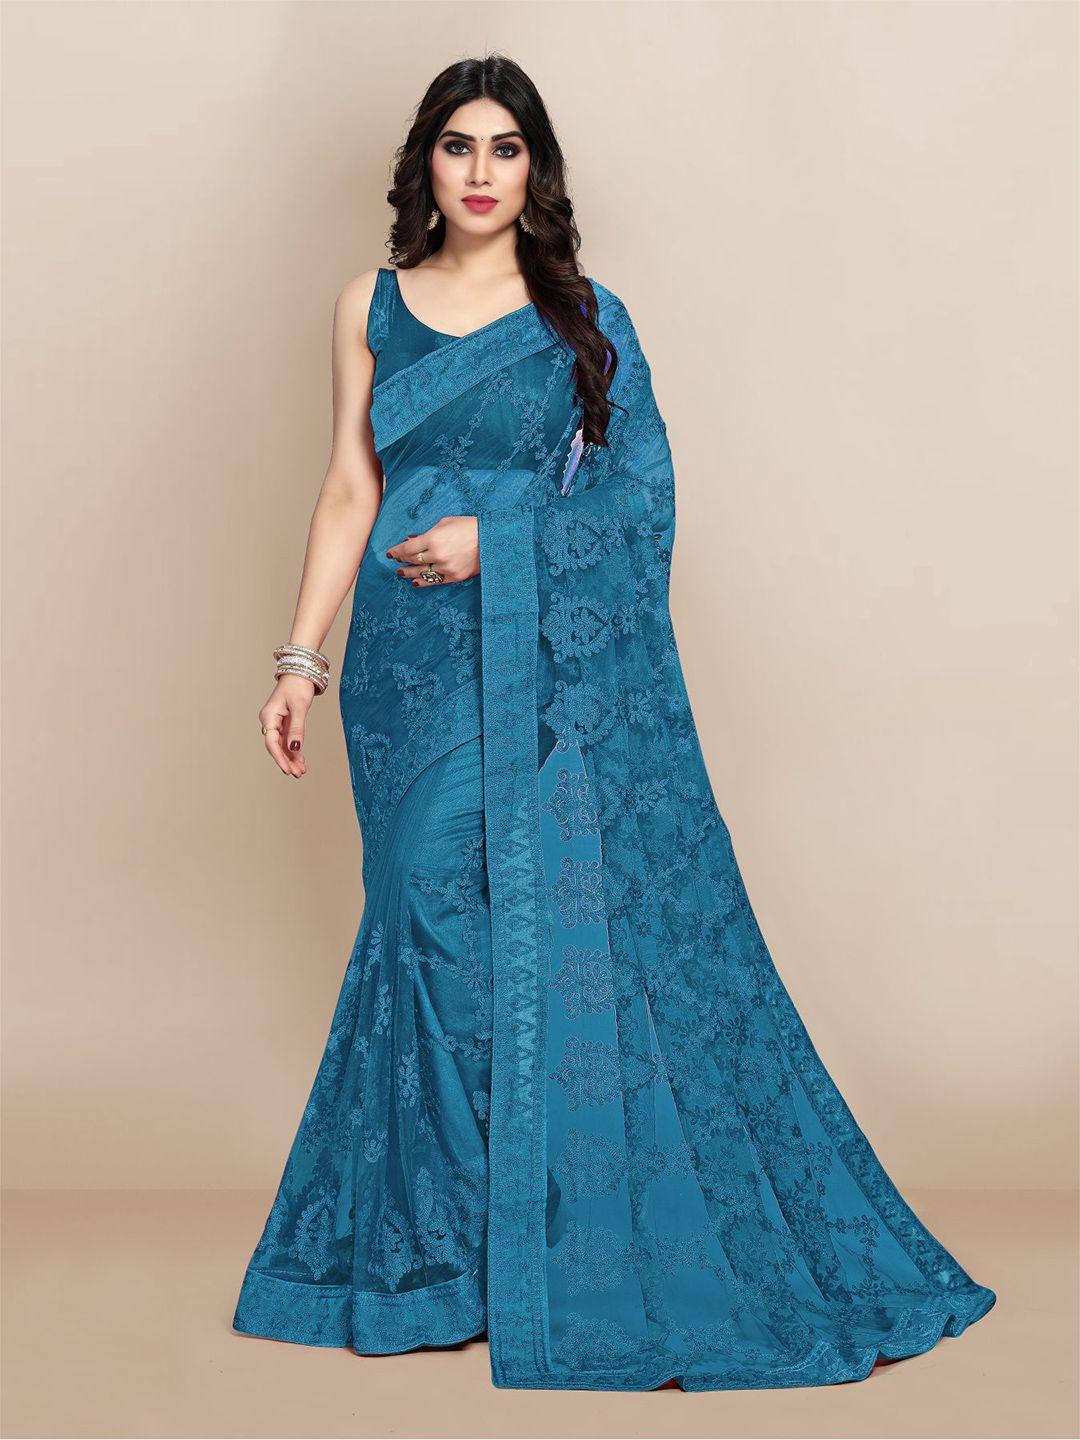 vairagee-blue-floral-embroidered-net-saree